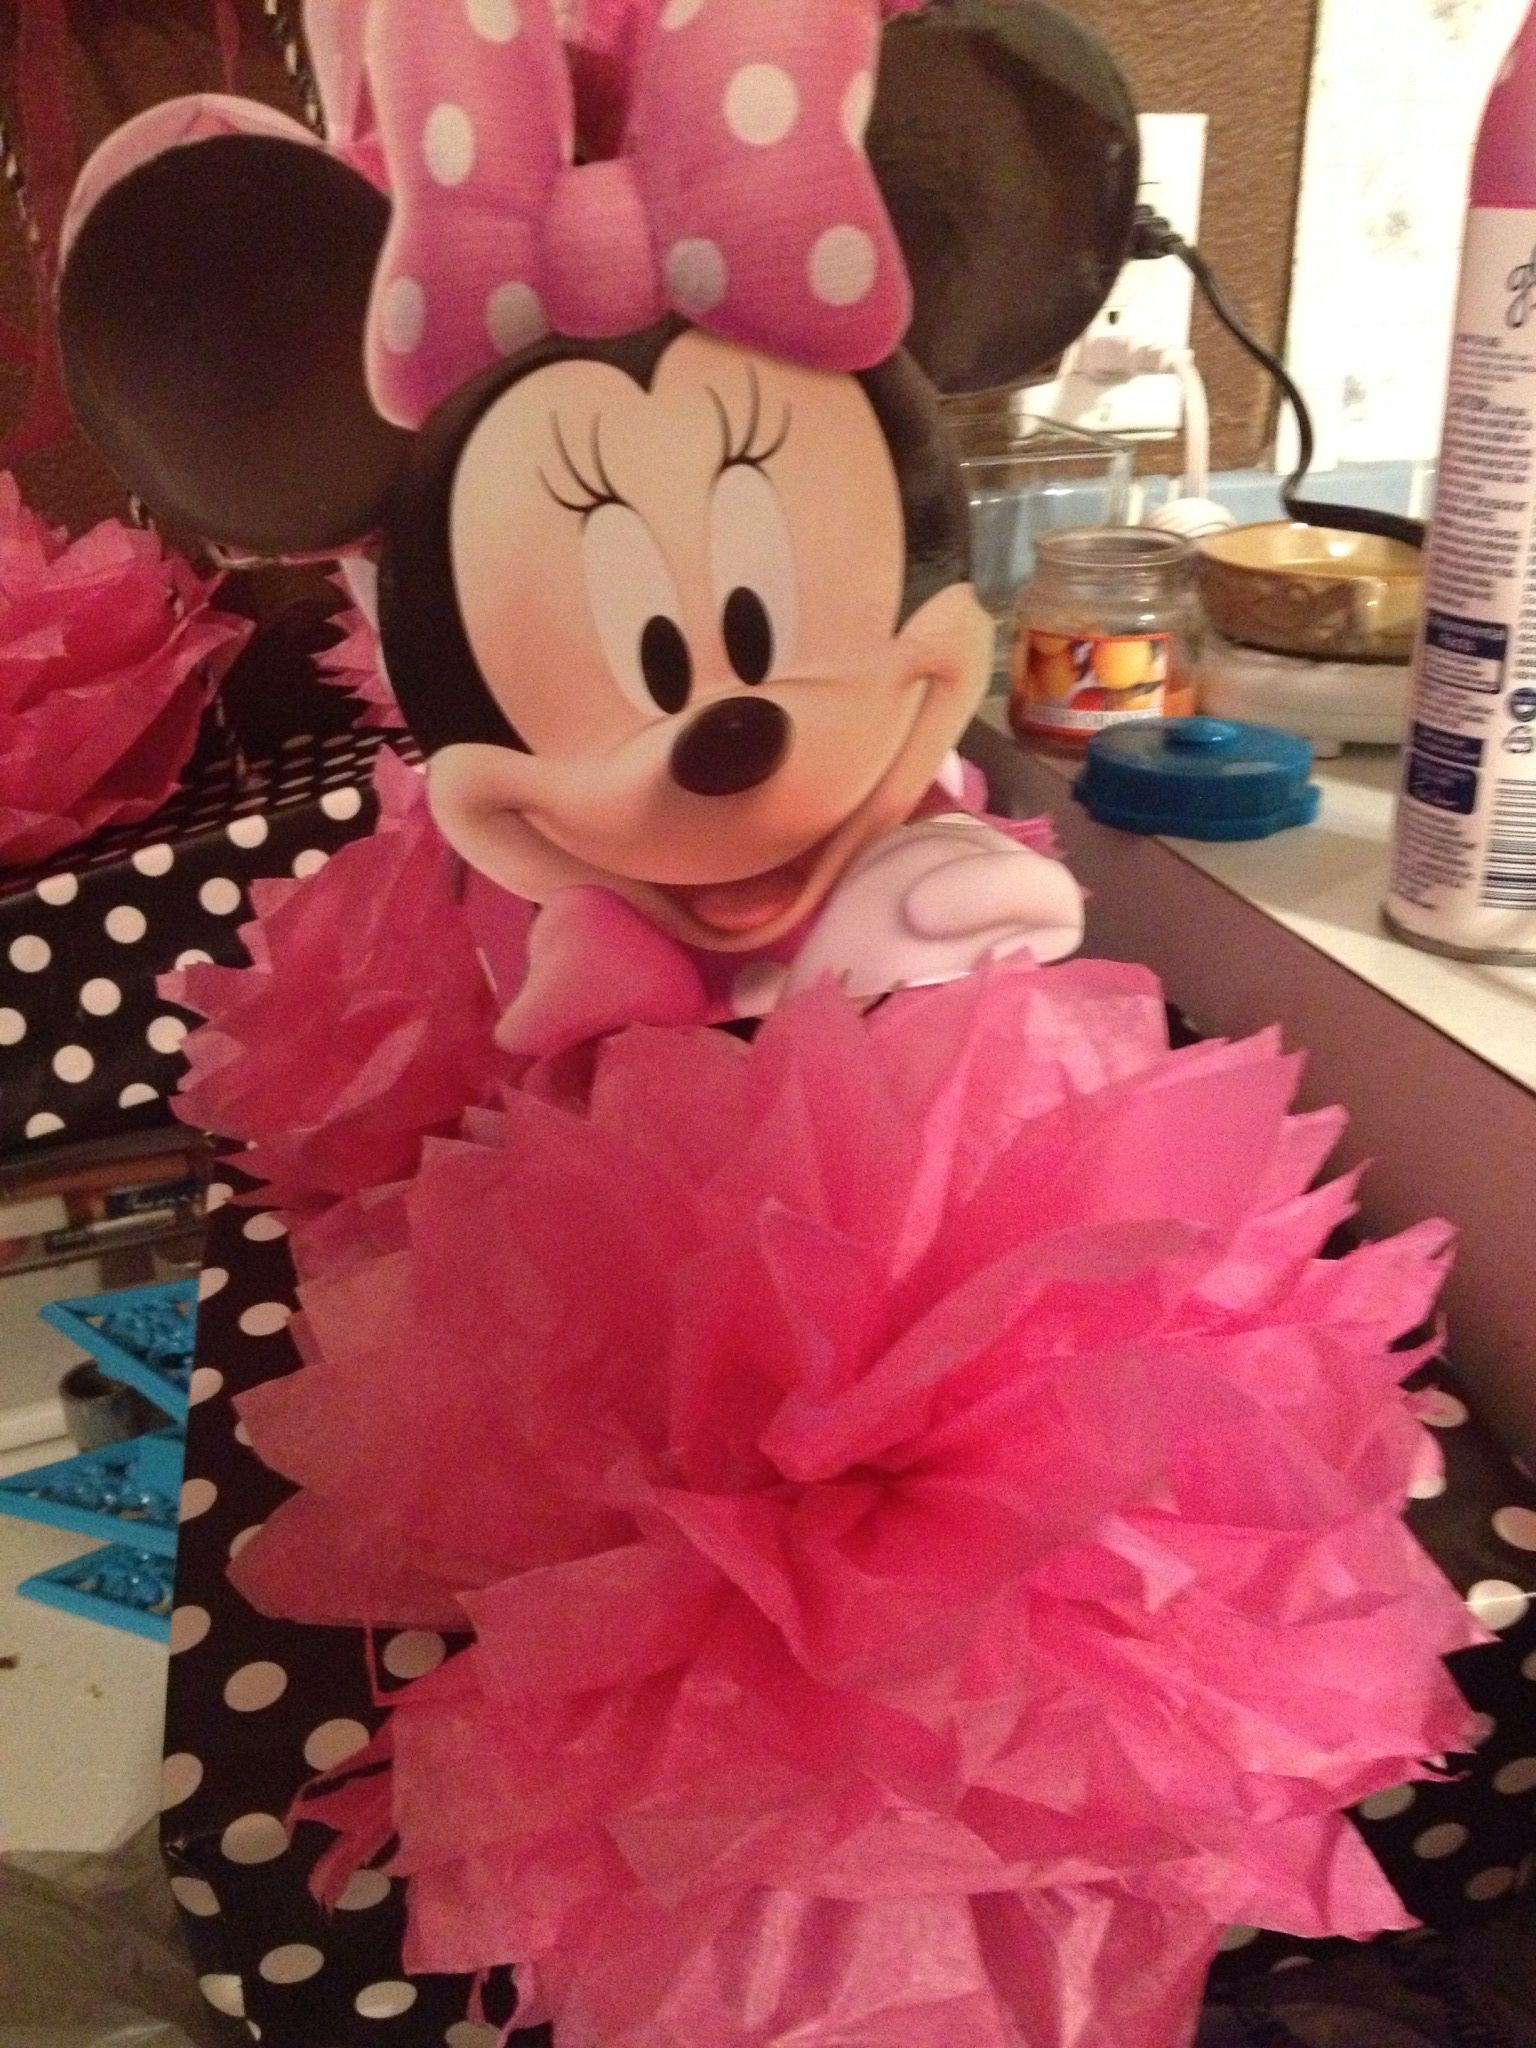 DIY Minnie Mouse Party Decorations
 DIY Minnie Mouse Party Decorations